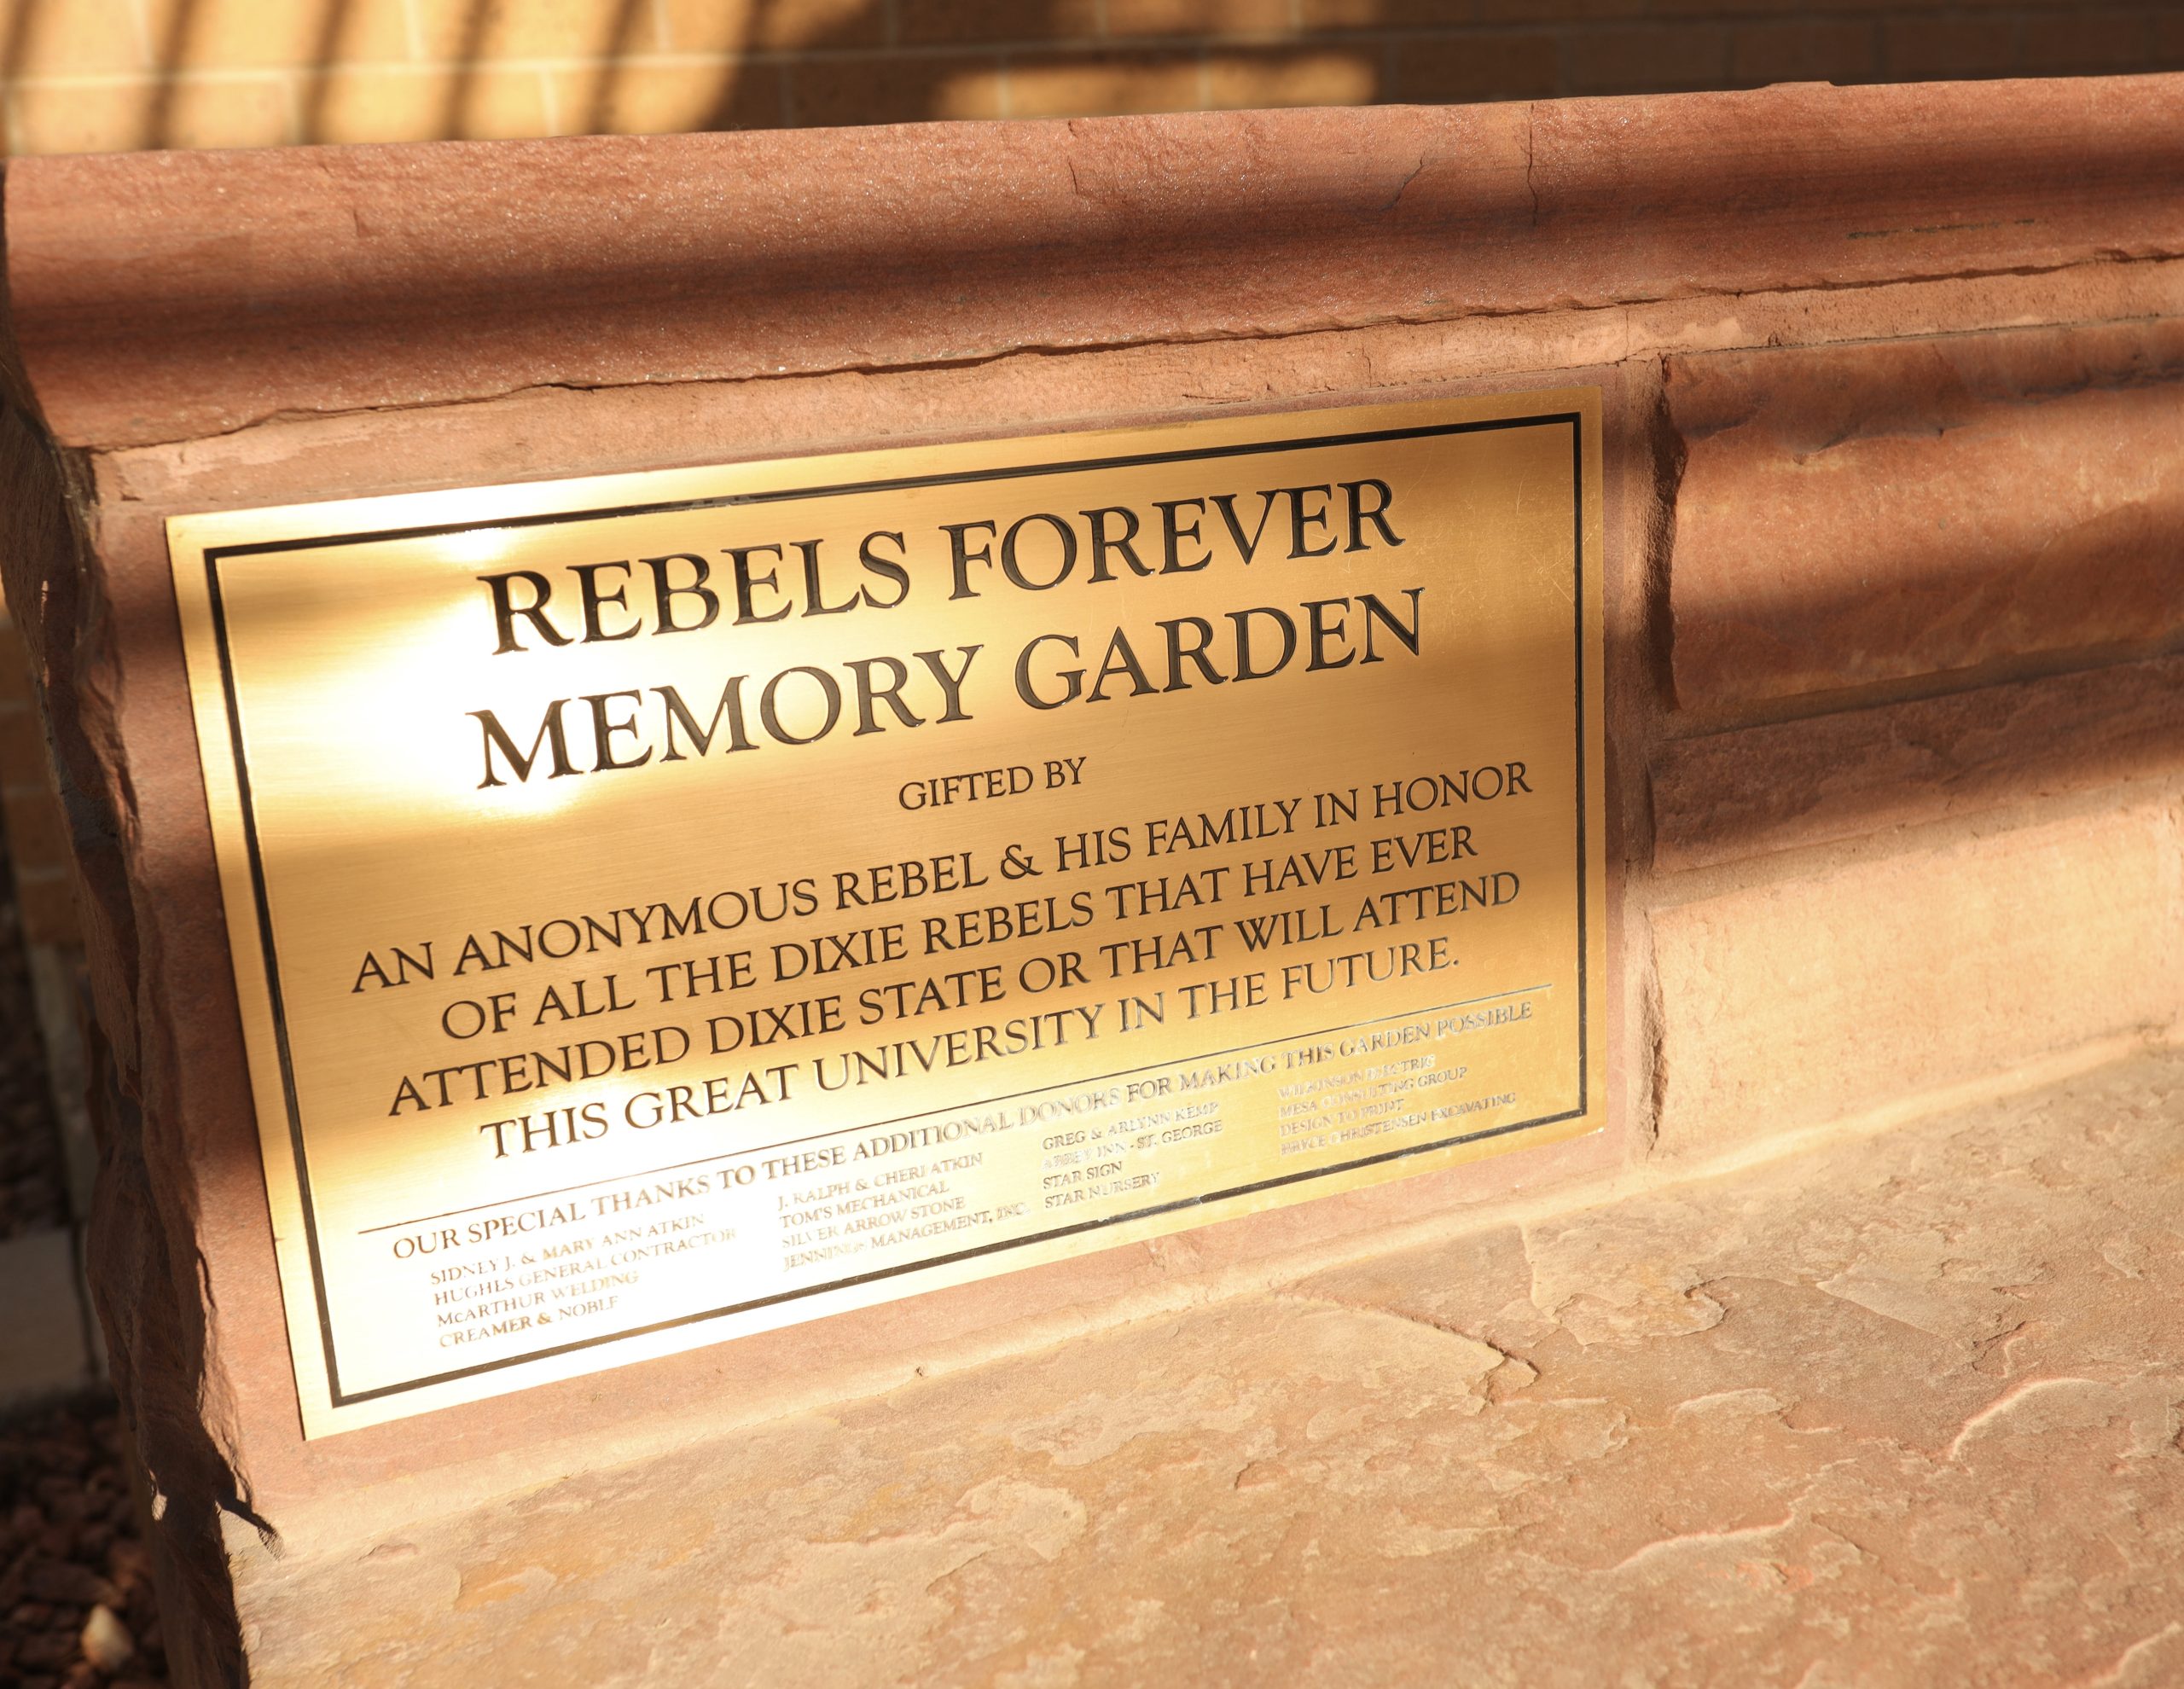 “Rebels forever” memory garden will stay through transition to Utah Tech University